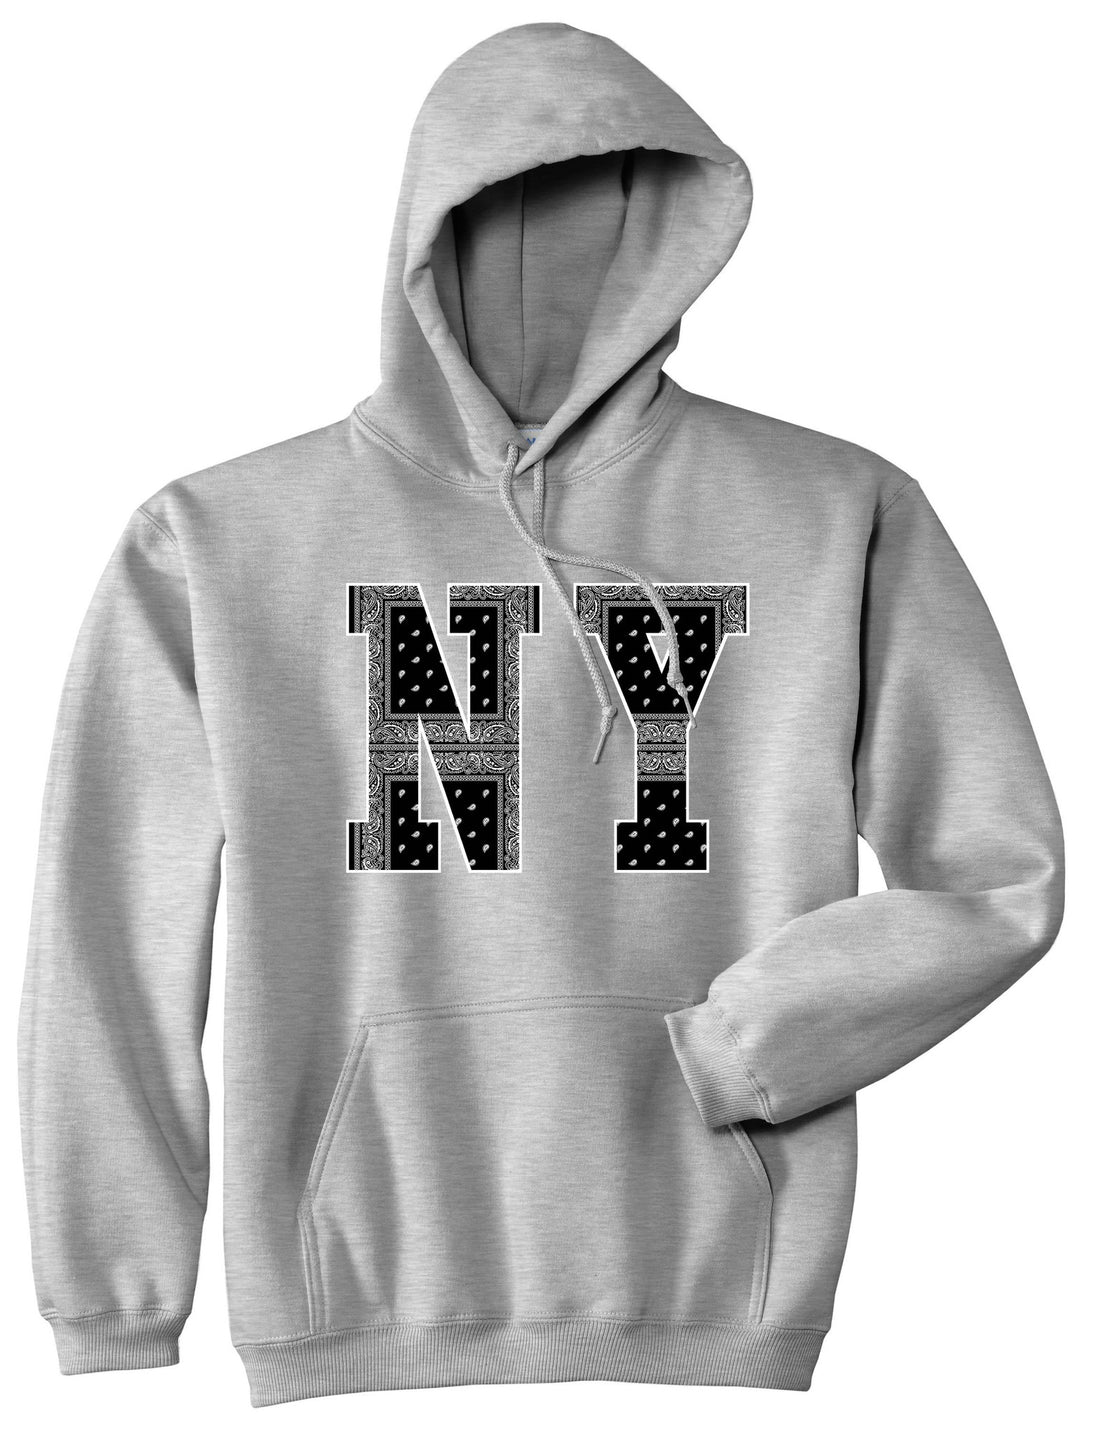 New York Bandana NYC Black by Kings Of NY Gang Flag Boys Kids Pullover Hoodie Hoody In Grey by Kings Of NY